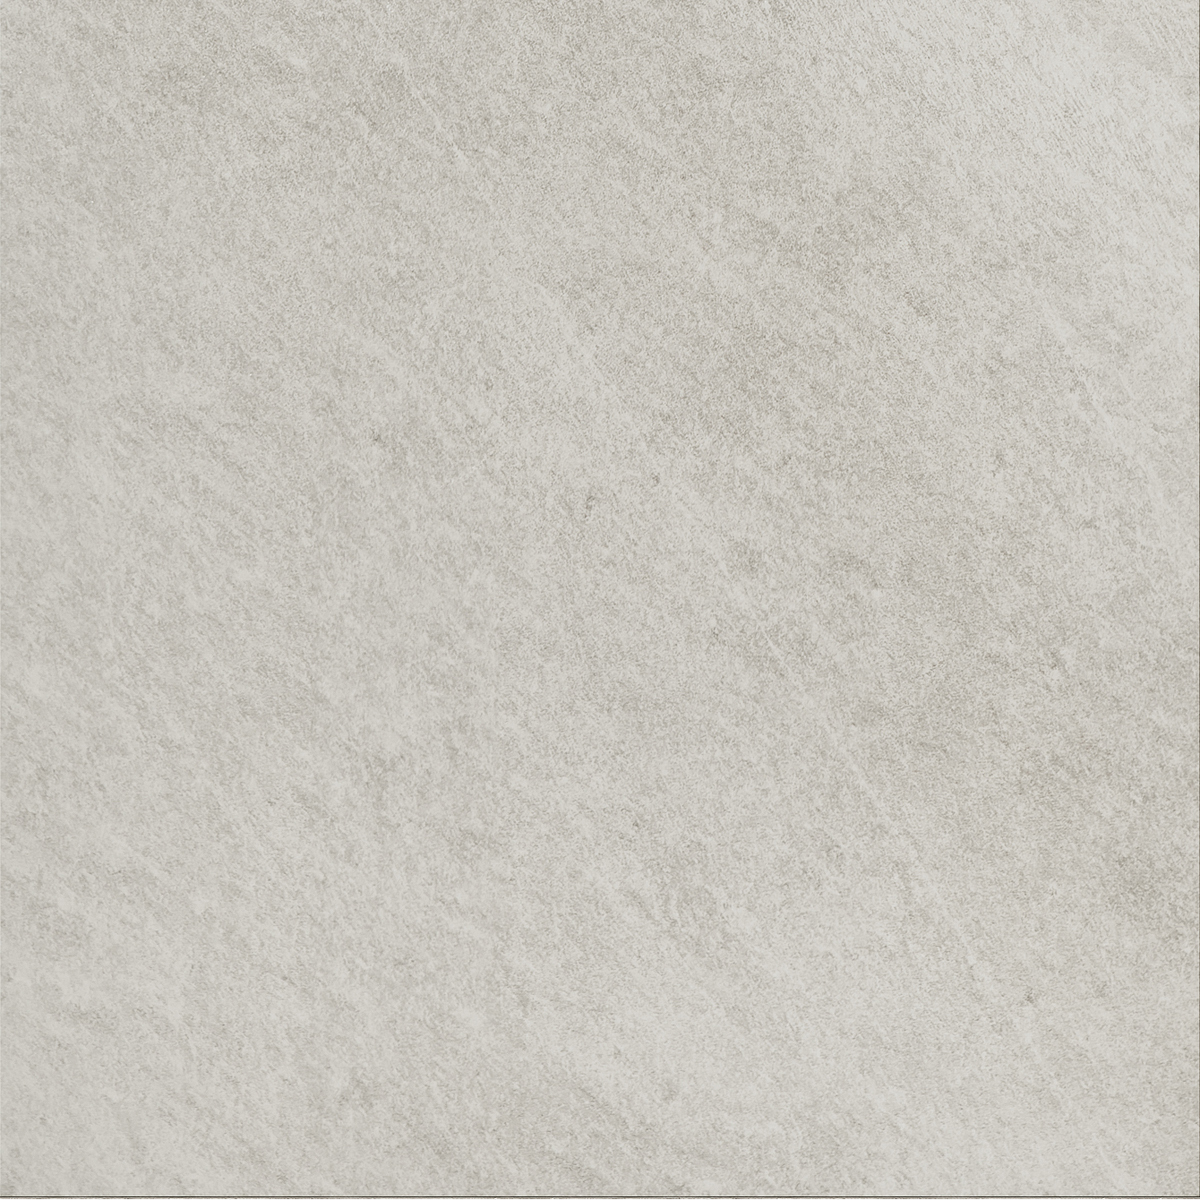 Imola X-Rock Bianco Natural Strutturato Matt 157070 60x60cm rectified 10mm - X-ROCK 60W